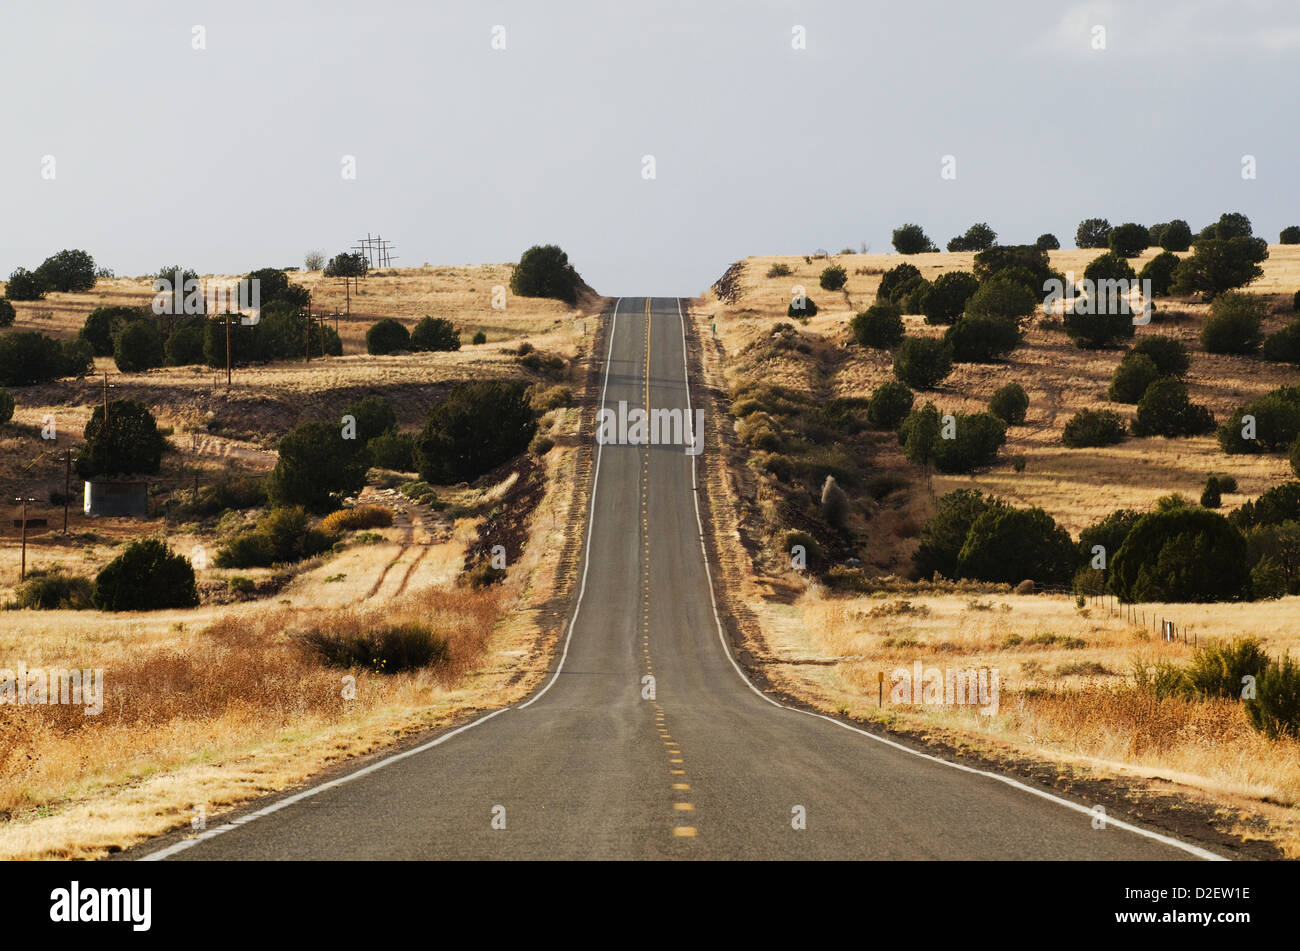 The famous road, Route 66, stretches across the Arizona desert near Seligman, NM. Stock Photo